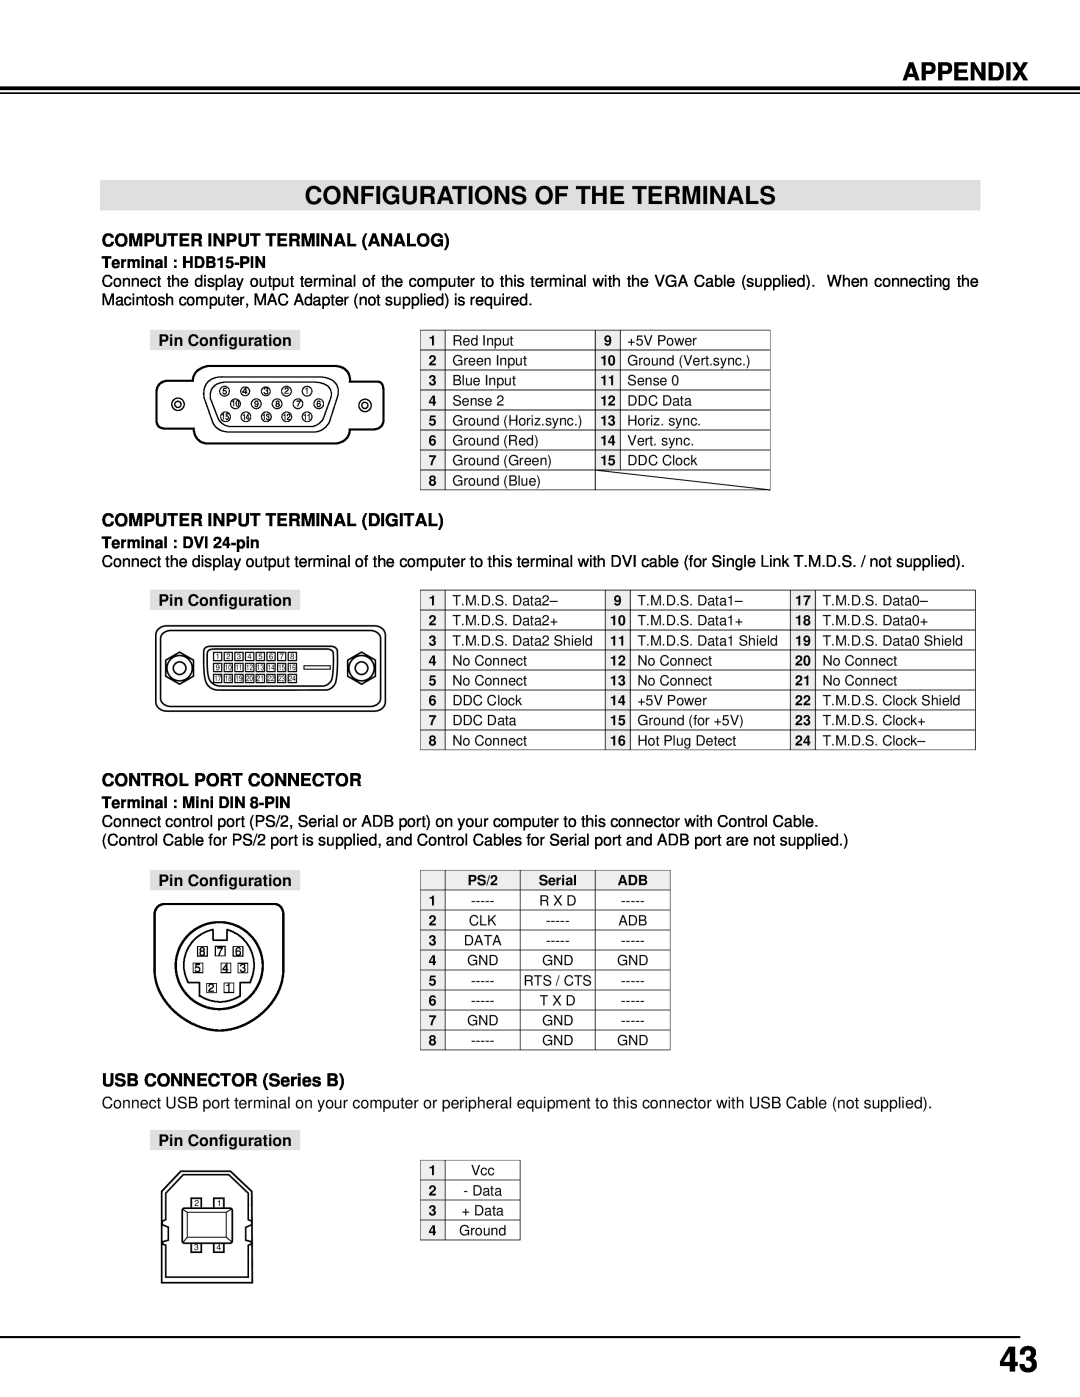 Eiki LC-XNB3W Appendix Configurations Of The Terminals, Terminal HDB15-PIN, Pin Configuration, Terminal DVI 24-pin 